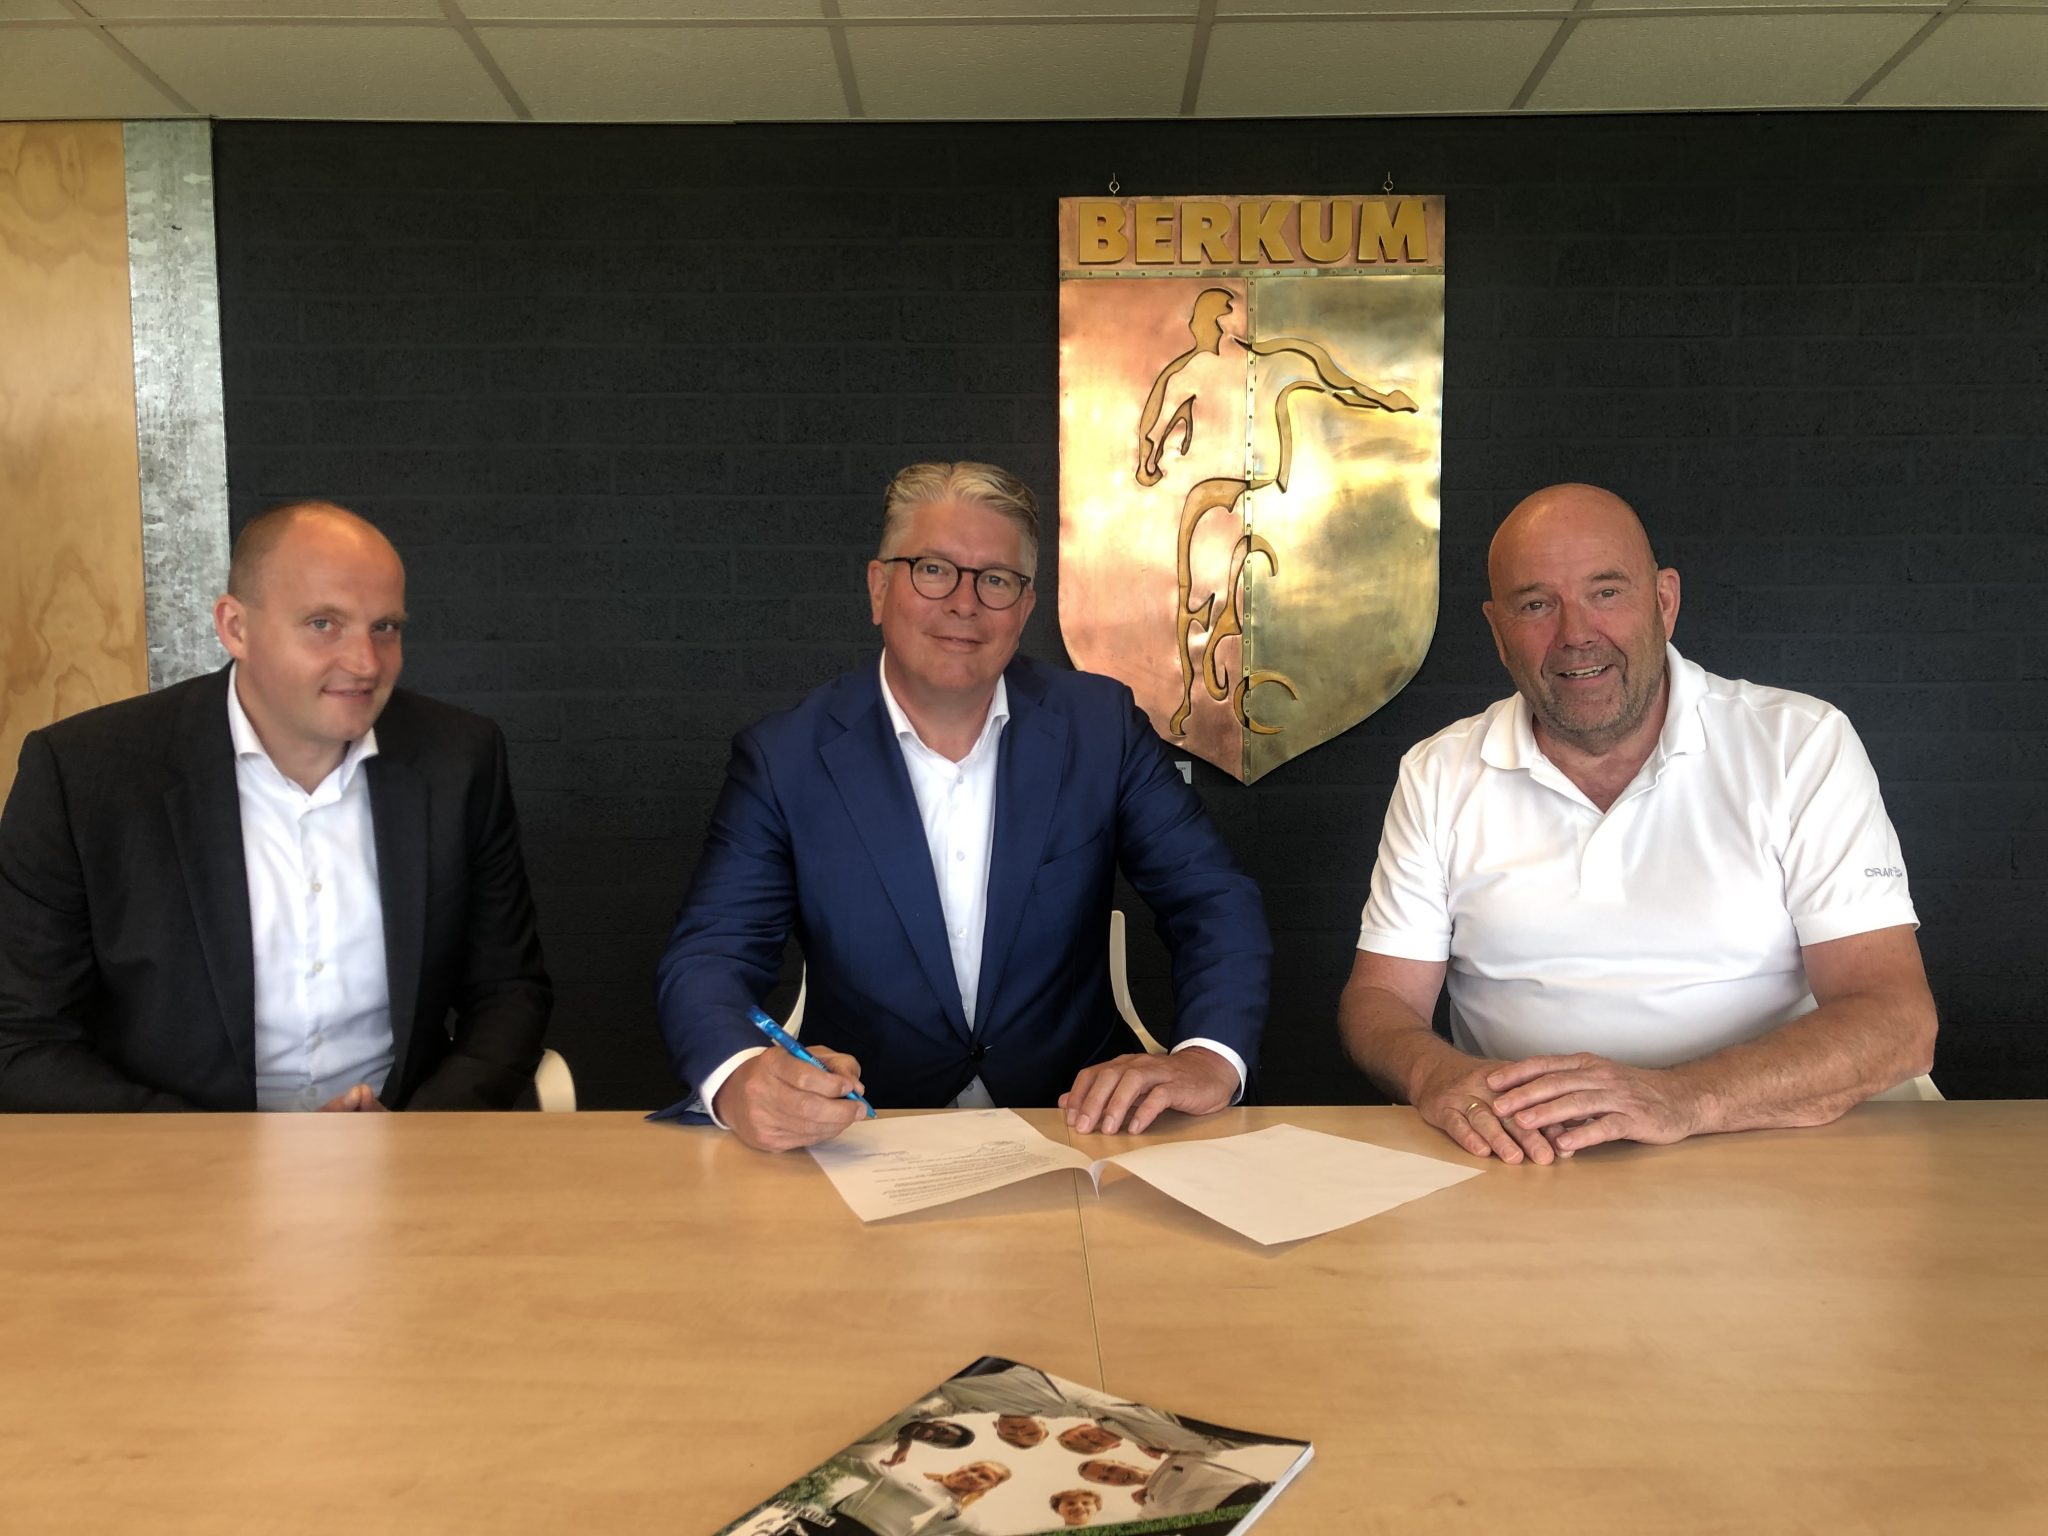 Hypotheek Visie Zwolle wederom sponsor VV Berkum